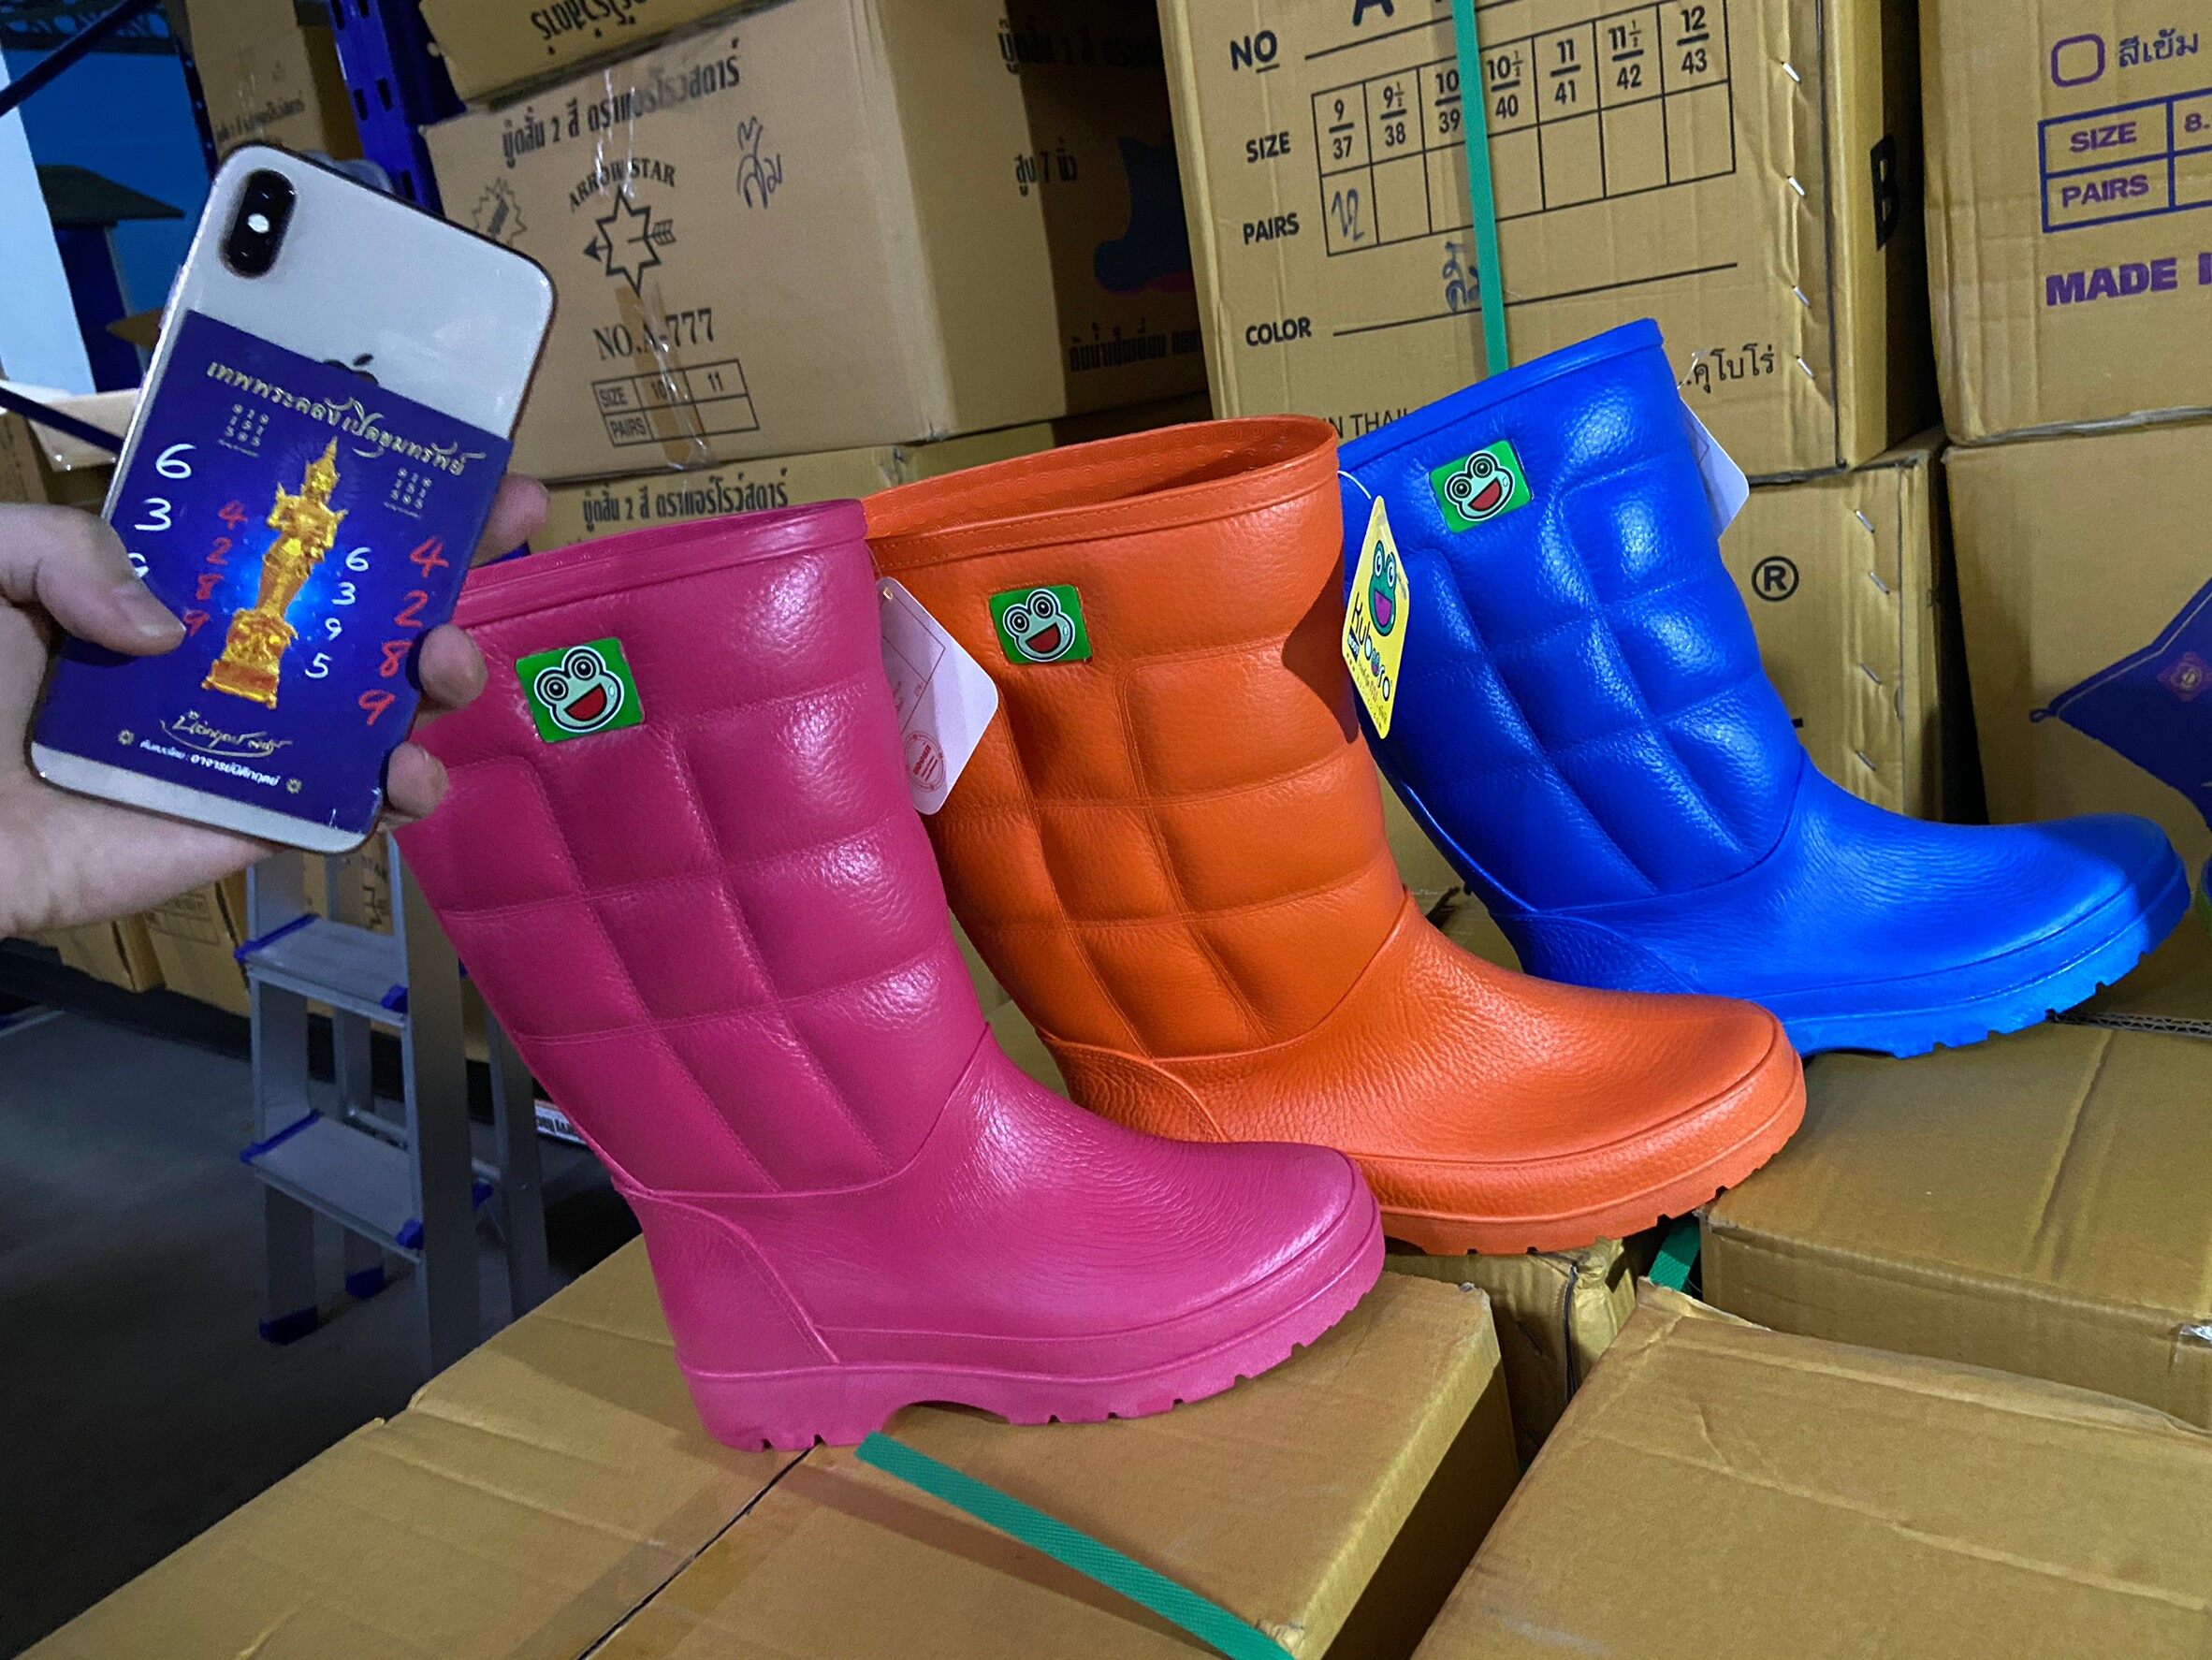 Kuboro [B-1000 รองเท้าบูทกบ 12 นิ้ว ถูกสุดในไทย] ค่าส่ง 22บ Colorful Rubber Rain Boots นิ่ม บู้ตยางทำนา บู้ทตลาดสด